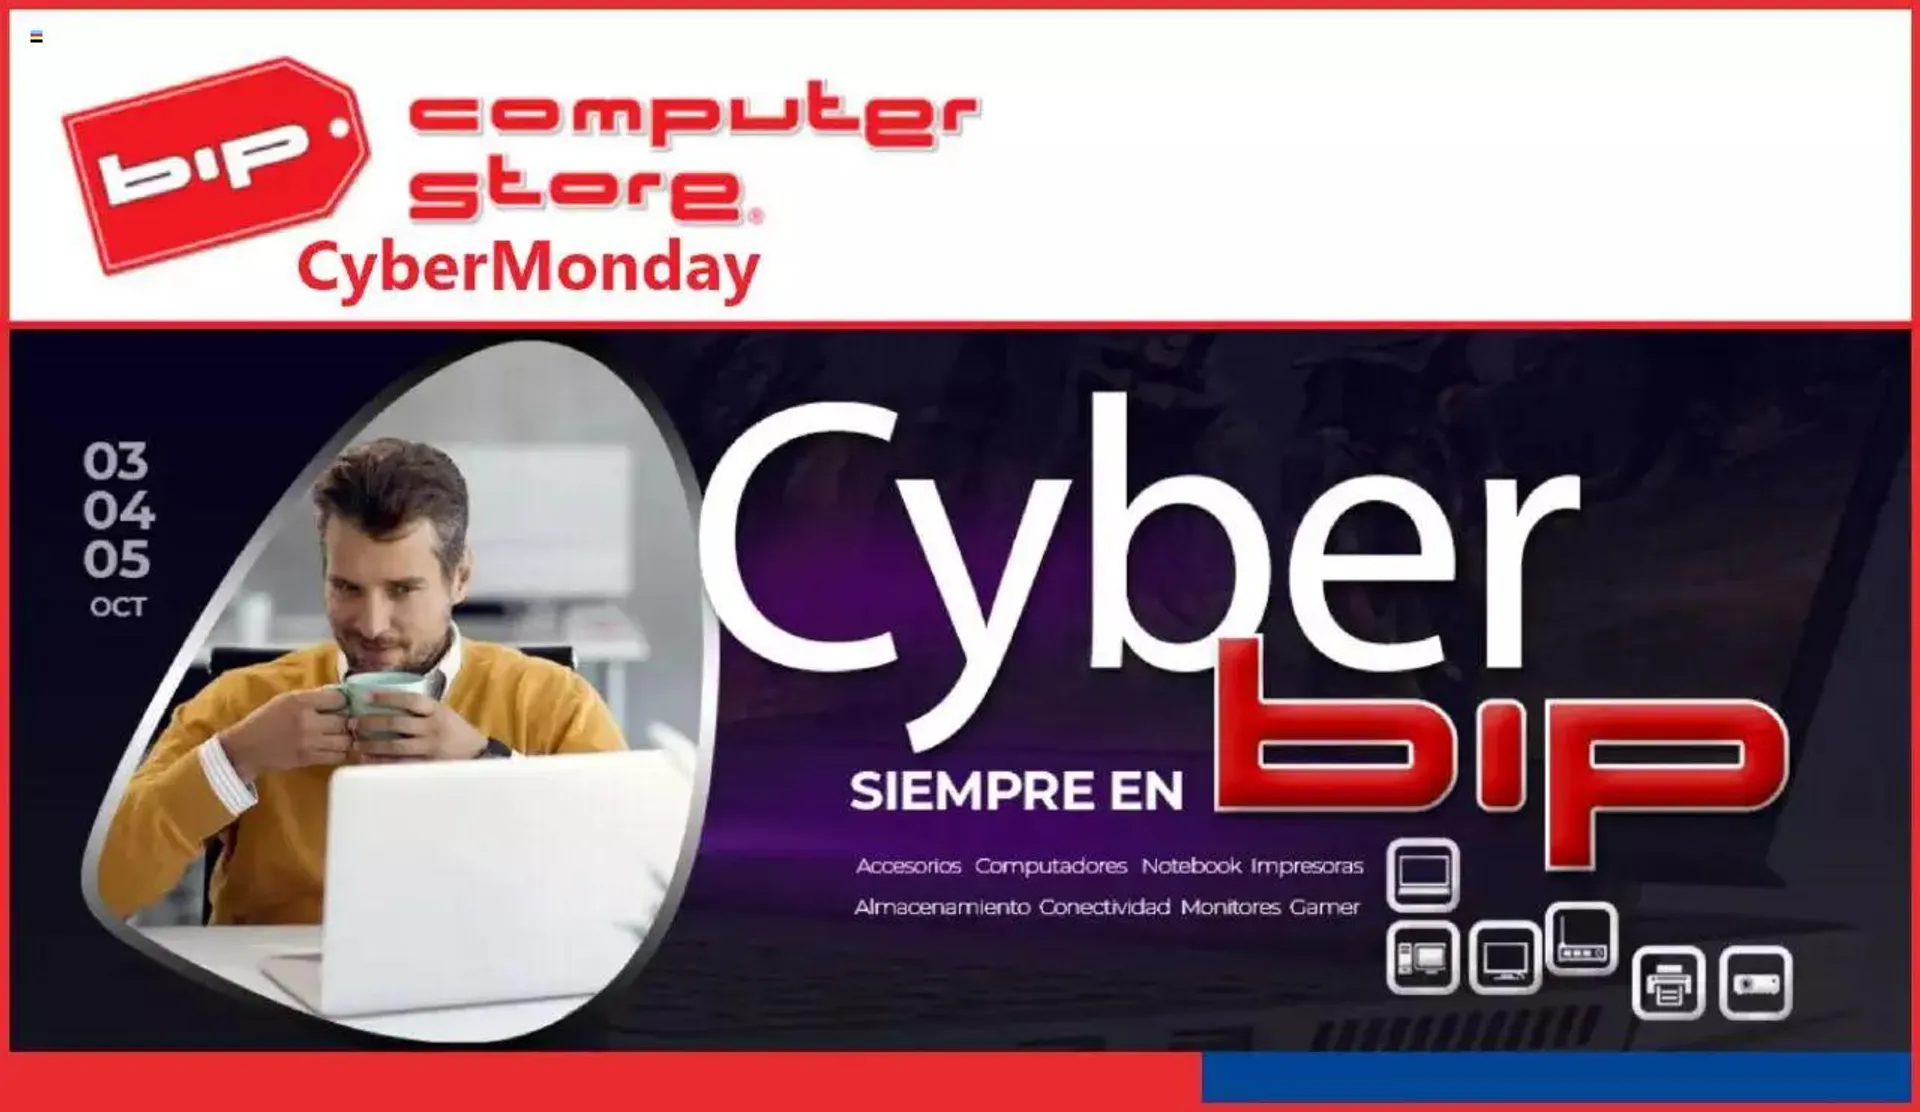 Bip - Cyber Monday Aviso - 0